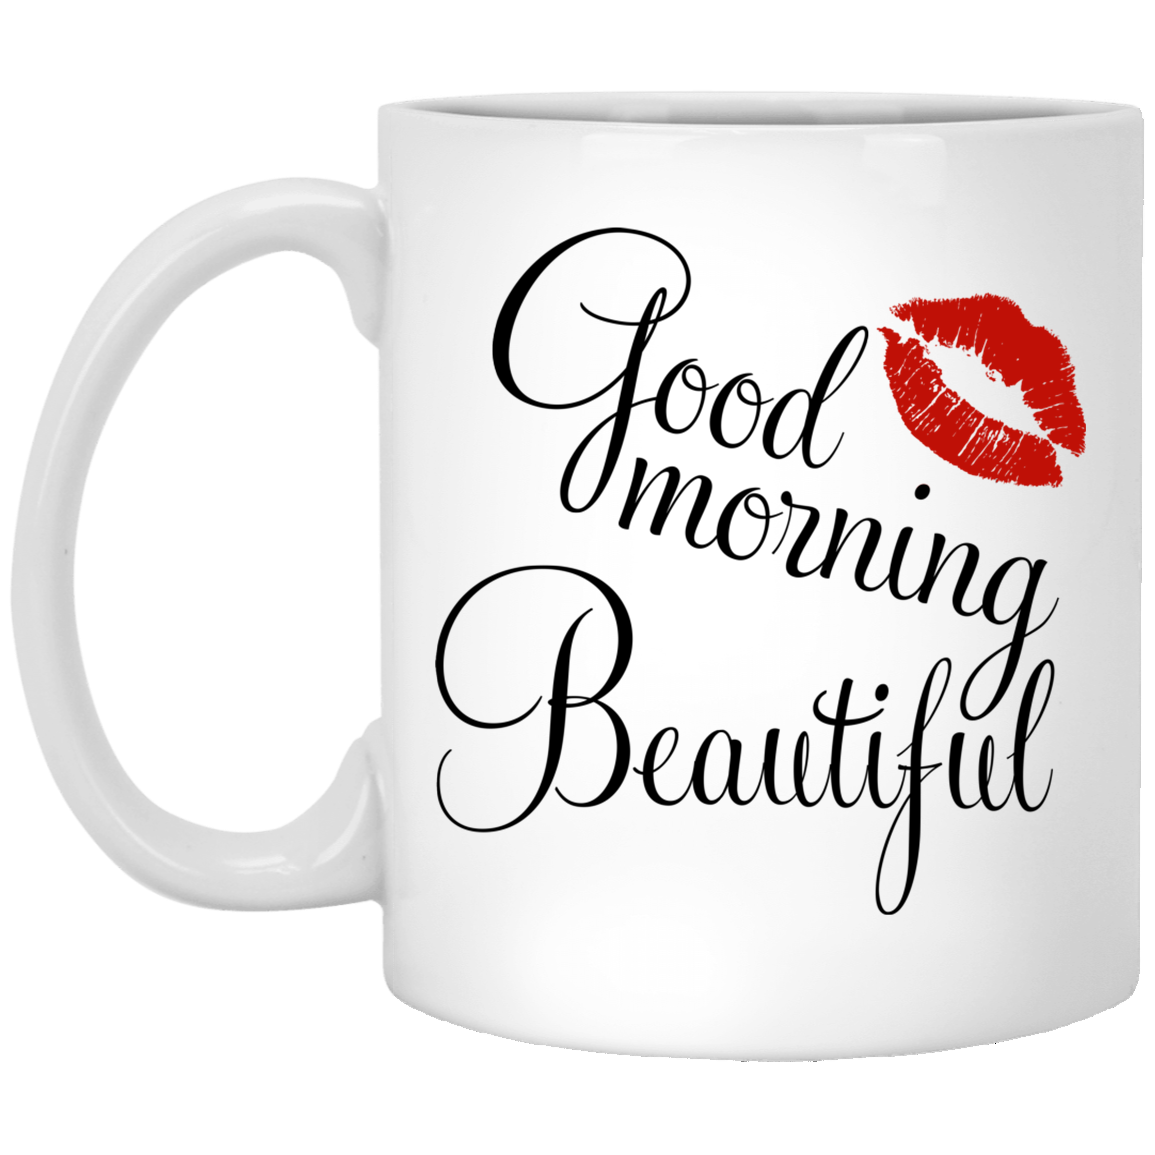 Good morning beautiful mugs - RobinPlaceFabrics